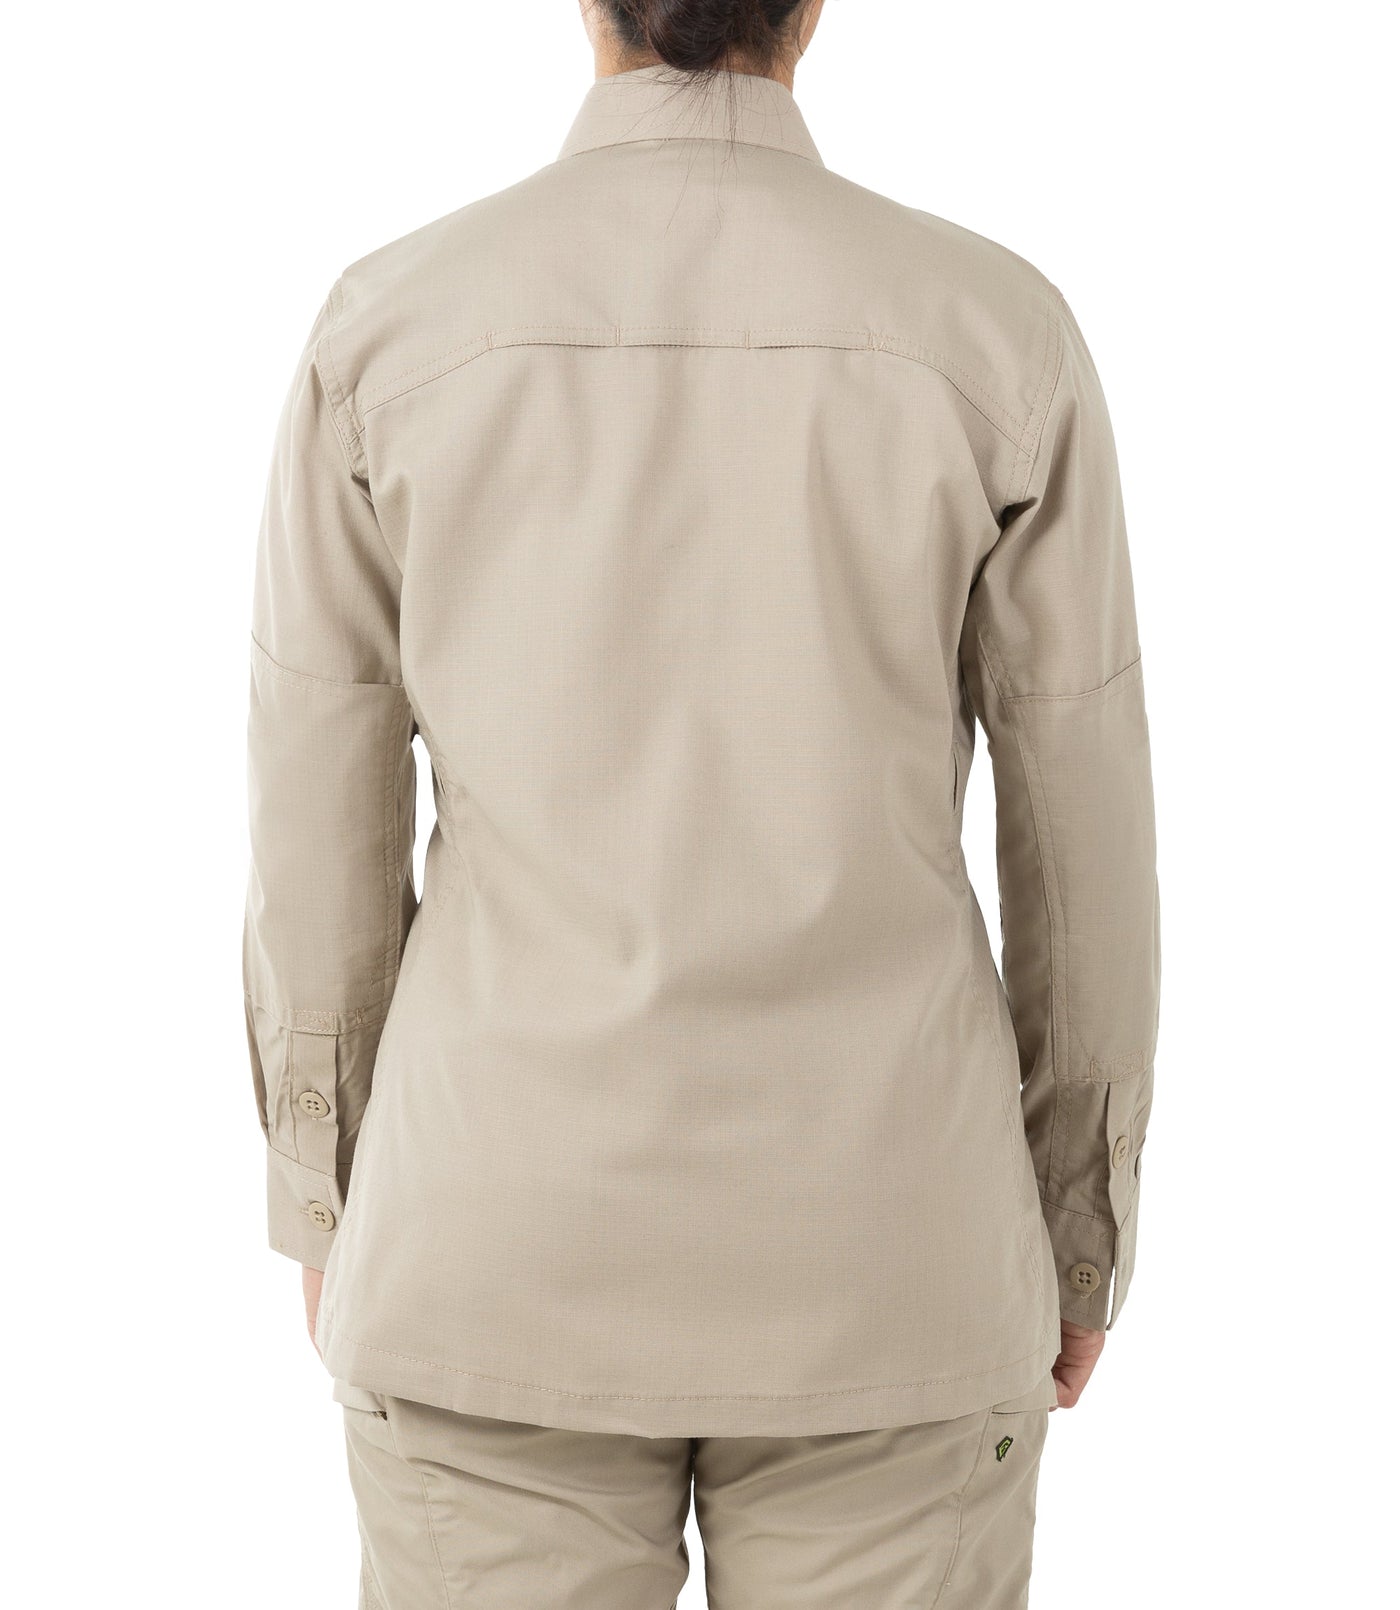 Women's V2 BDU Long Sleeve Shirt - Khaki